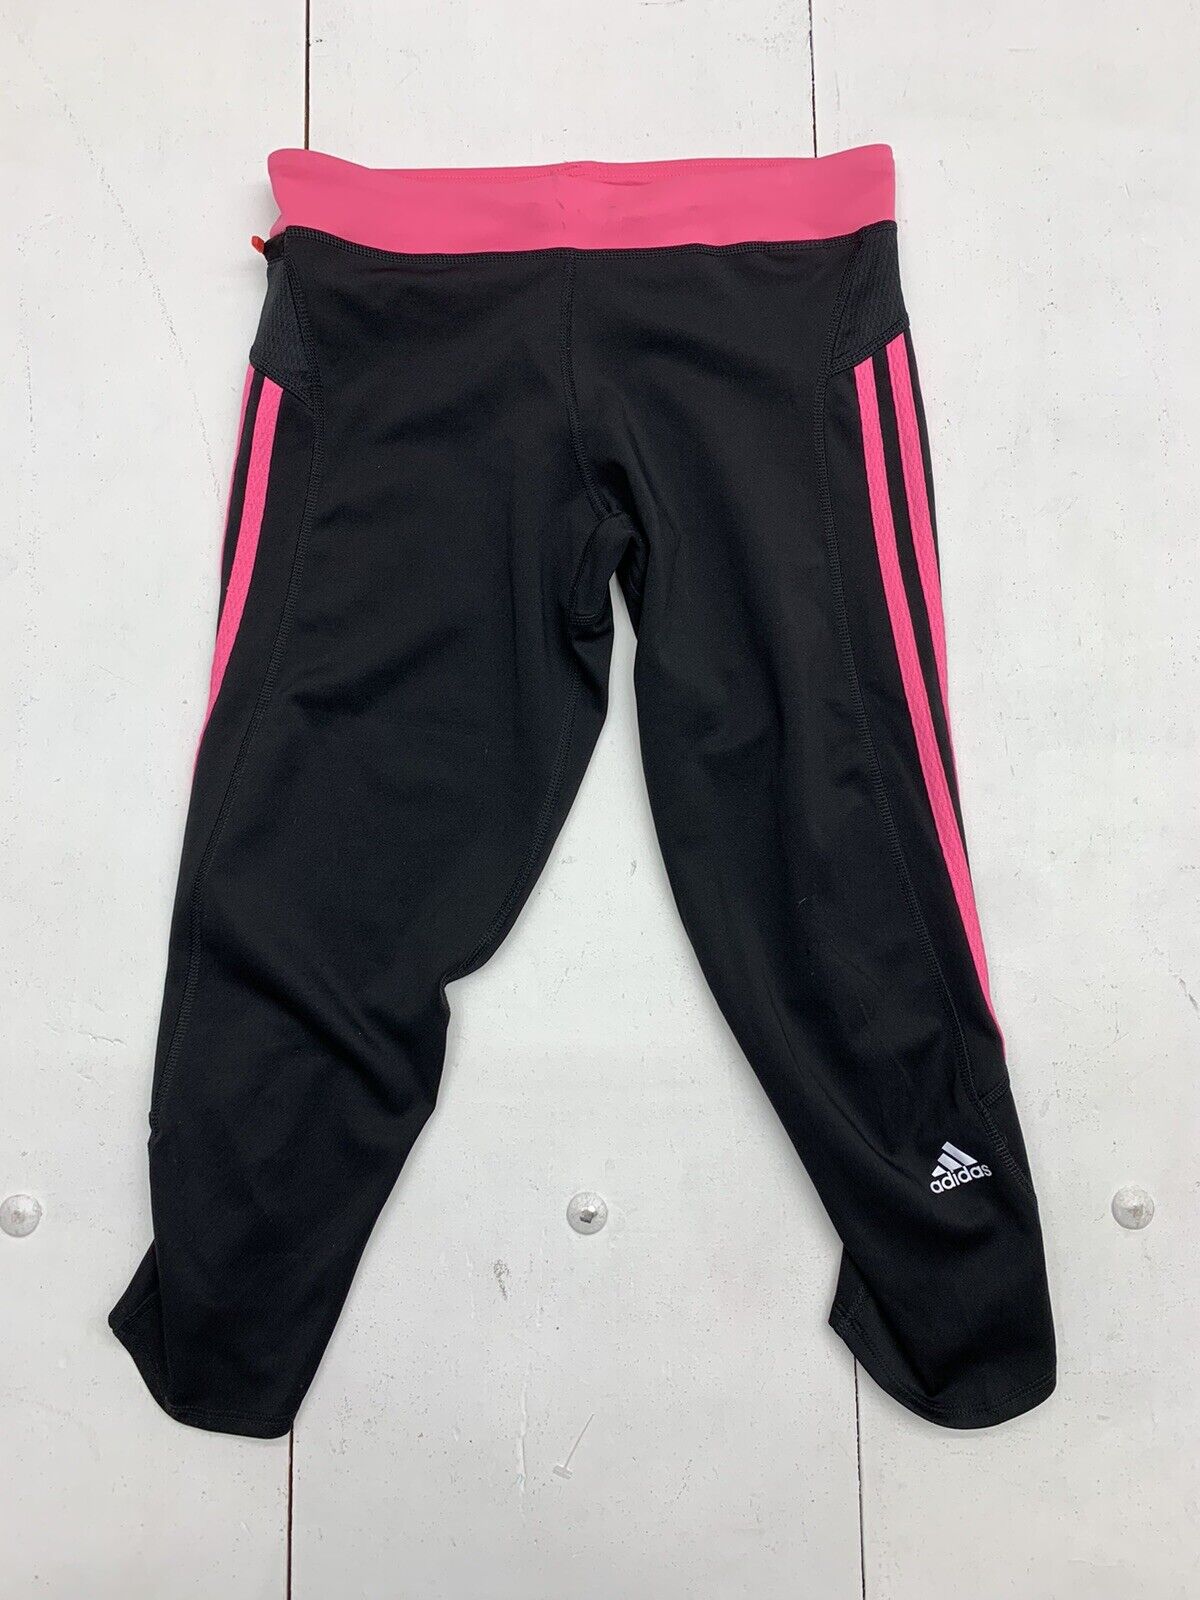 Adidas Capri Spandex 3 Stripe Pants Black Pink